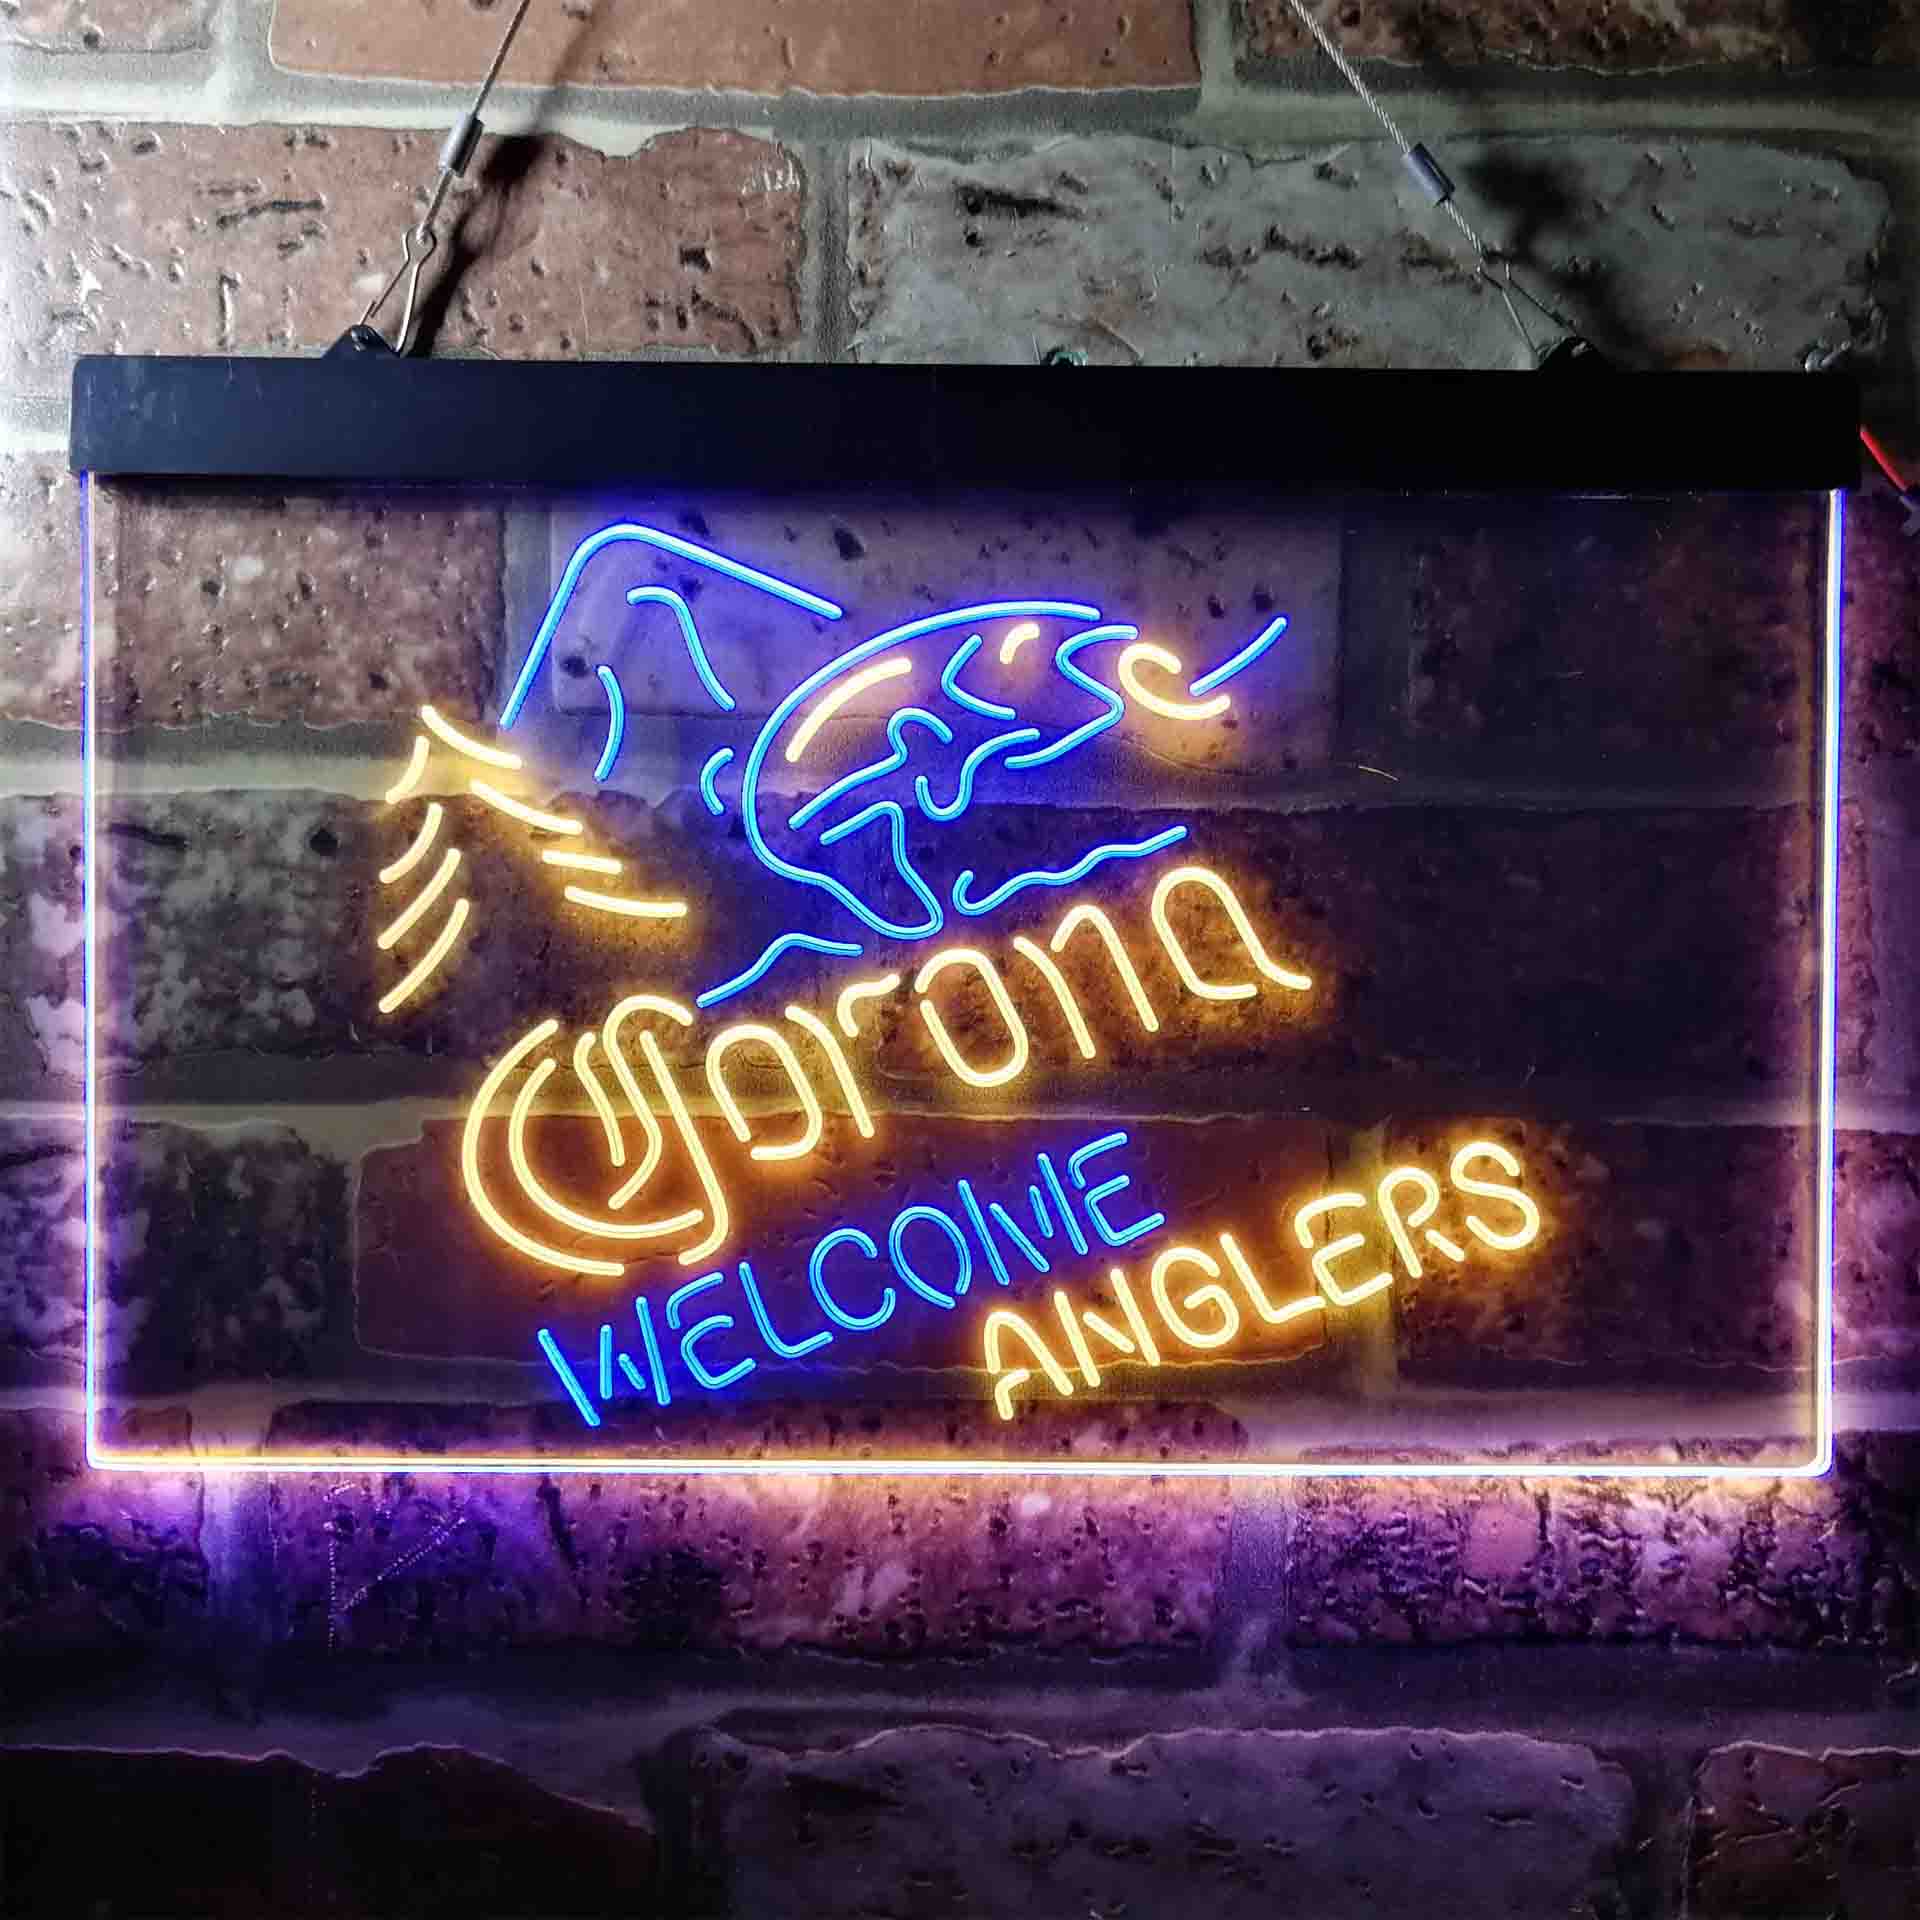 Corona Fishing Welcome Anglers Neon LED Sign